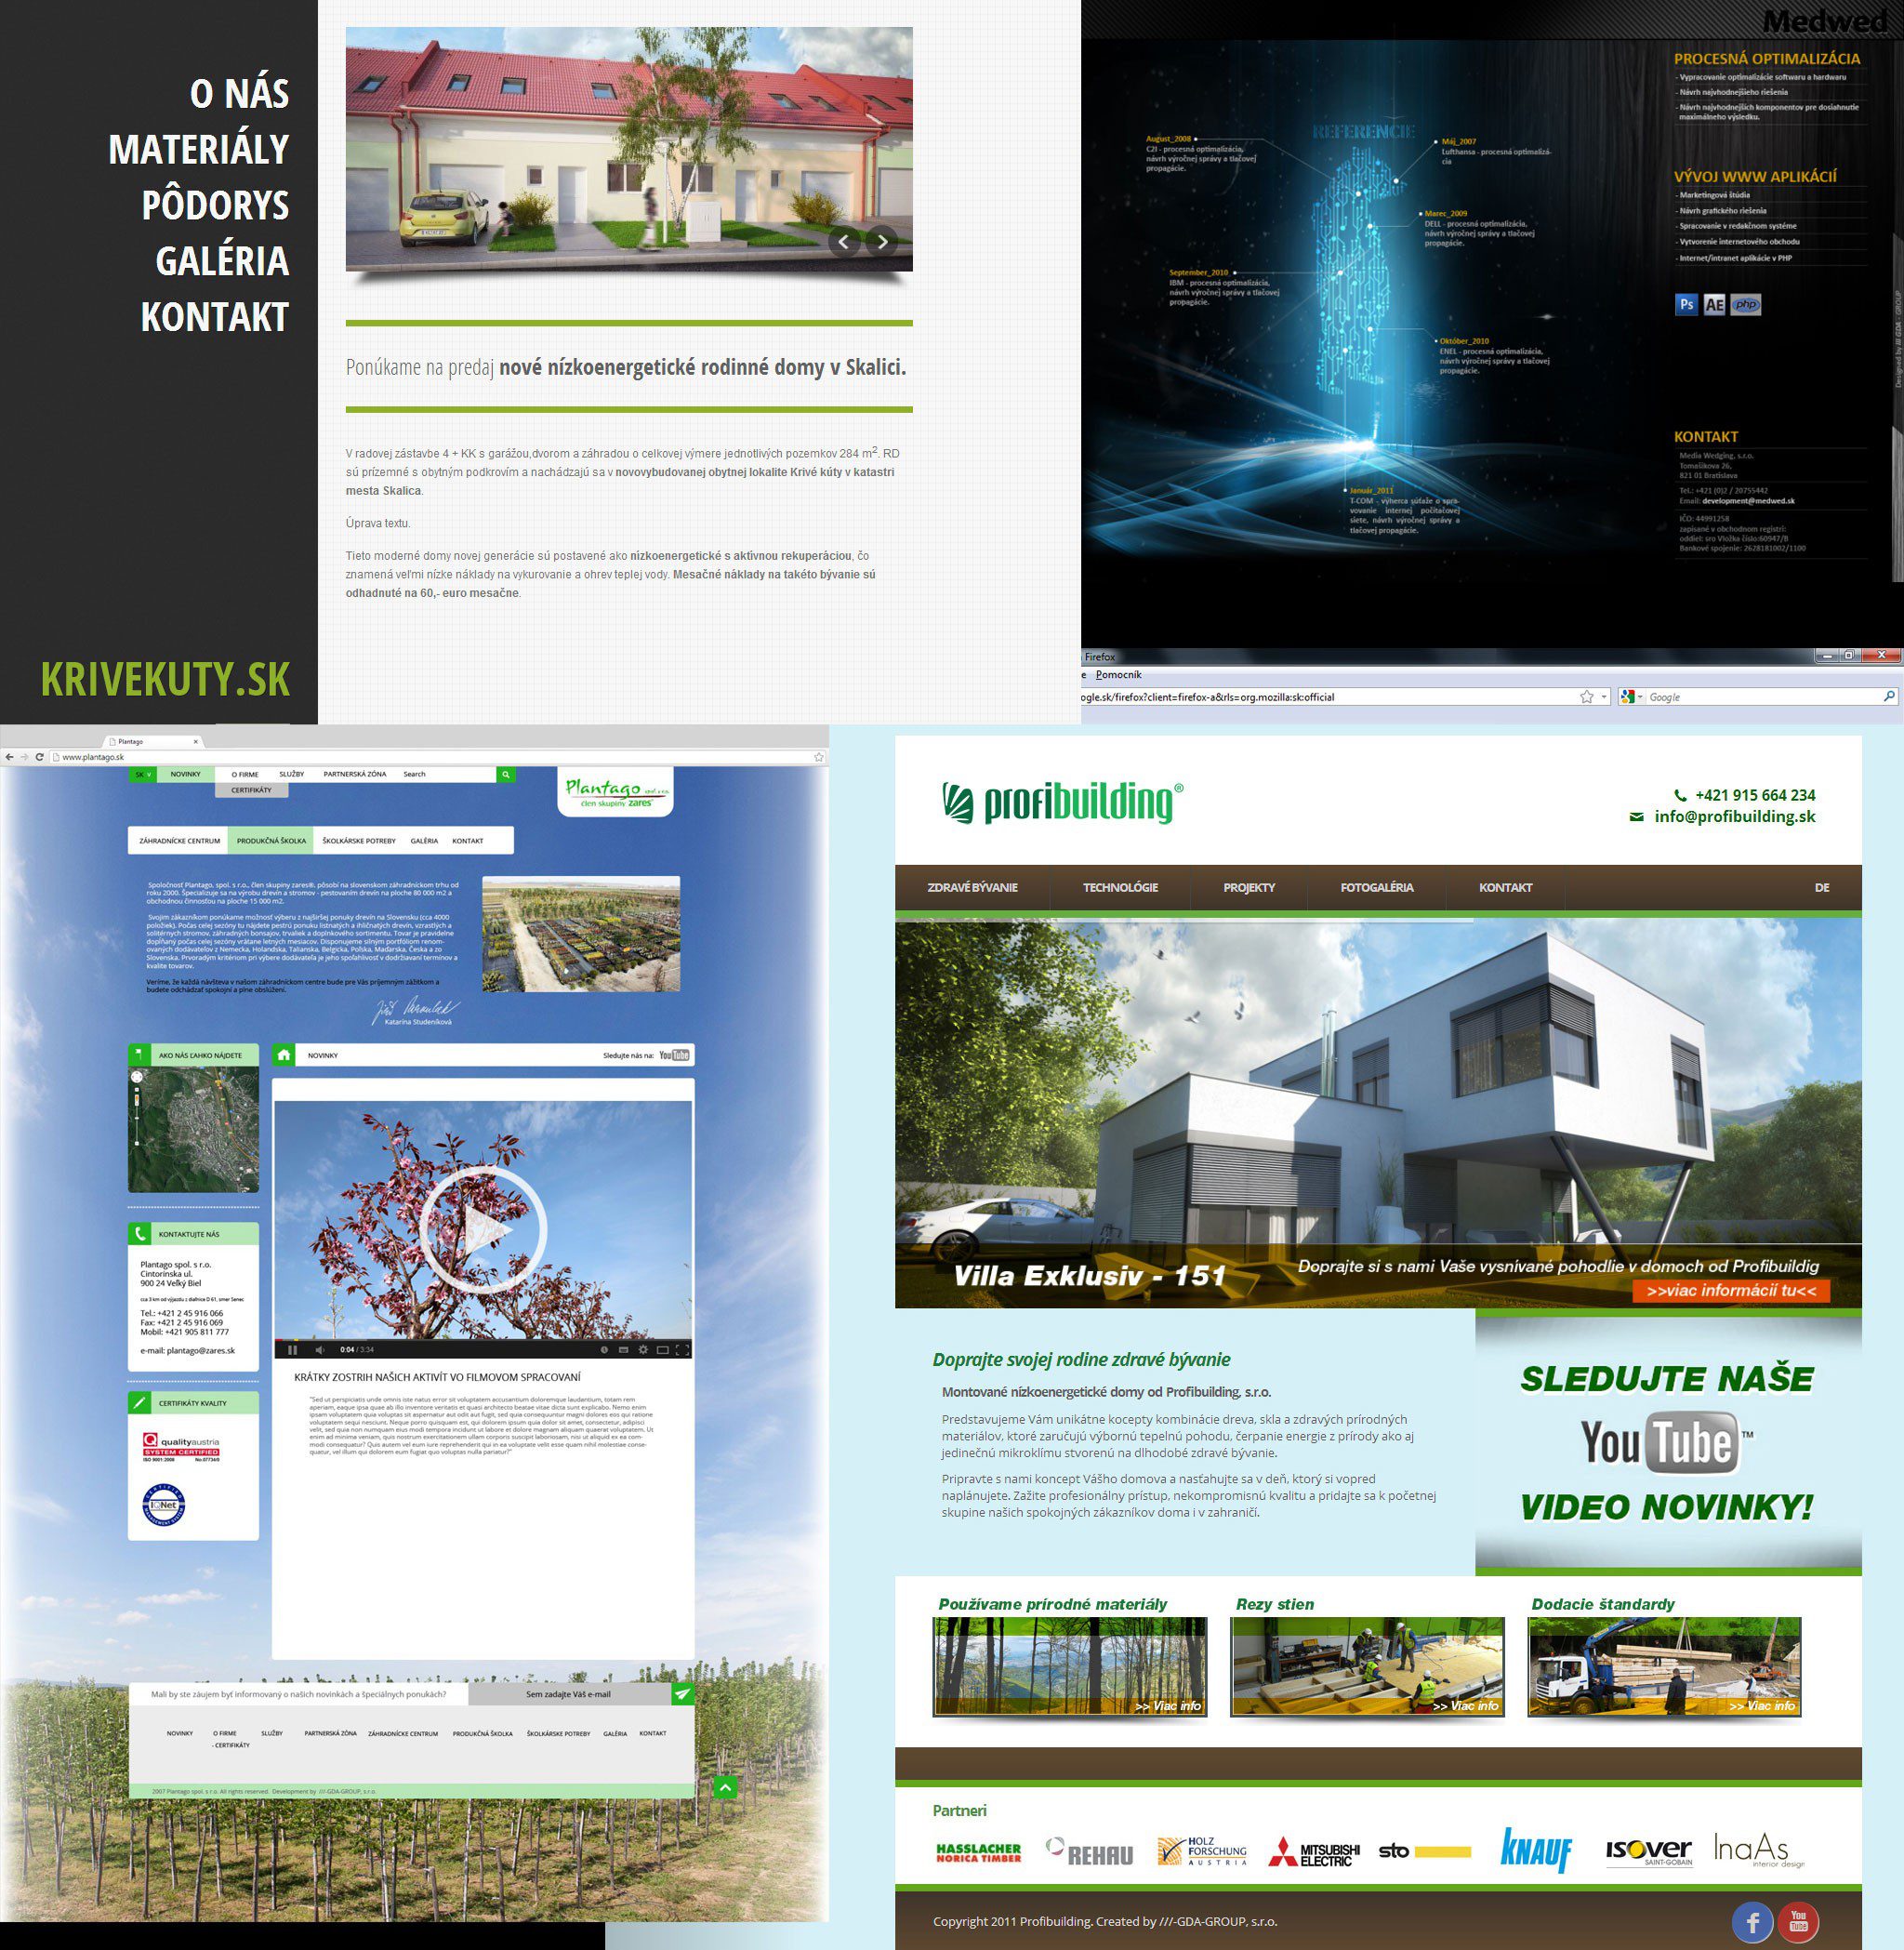 Web development - KRIVEKUTY, Profibuilding, Plantago, Medwed - Homepage